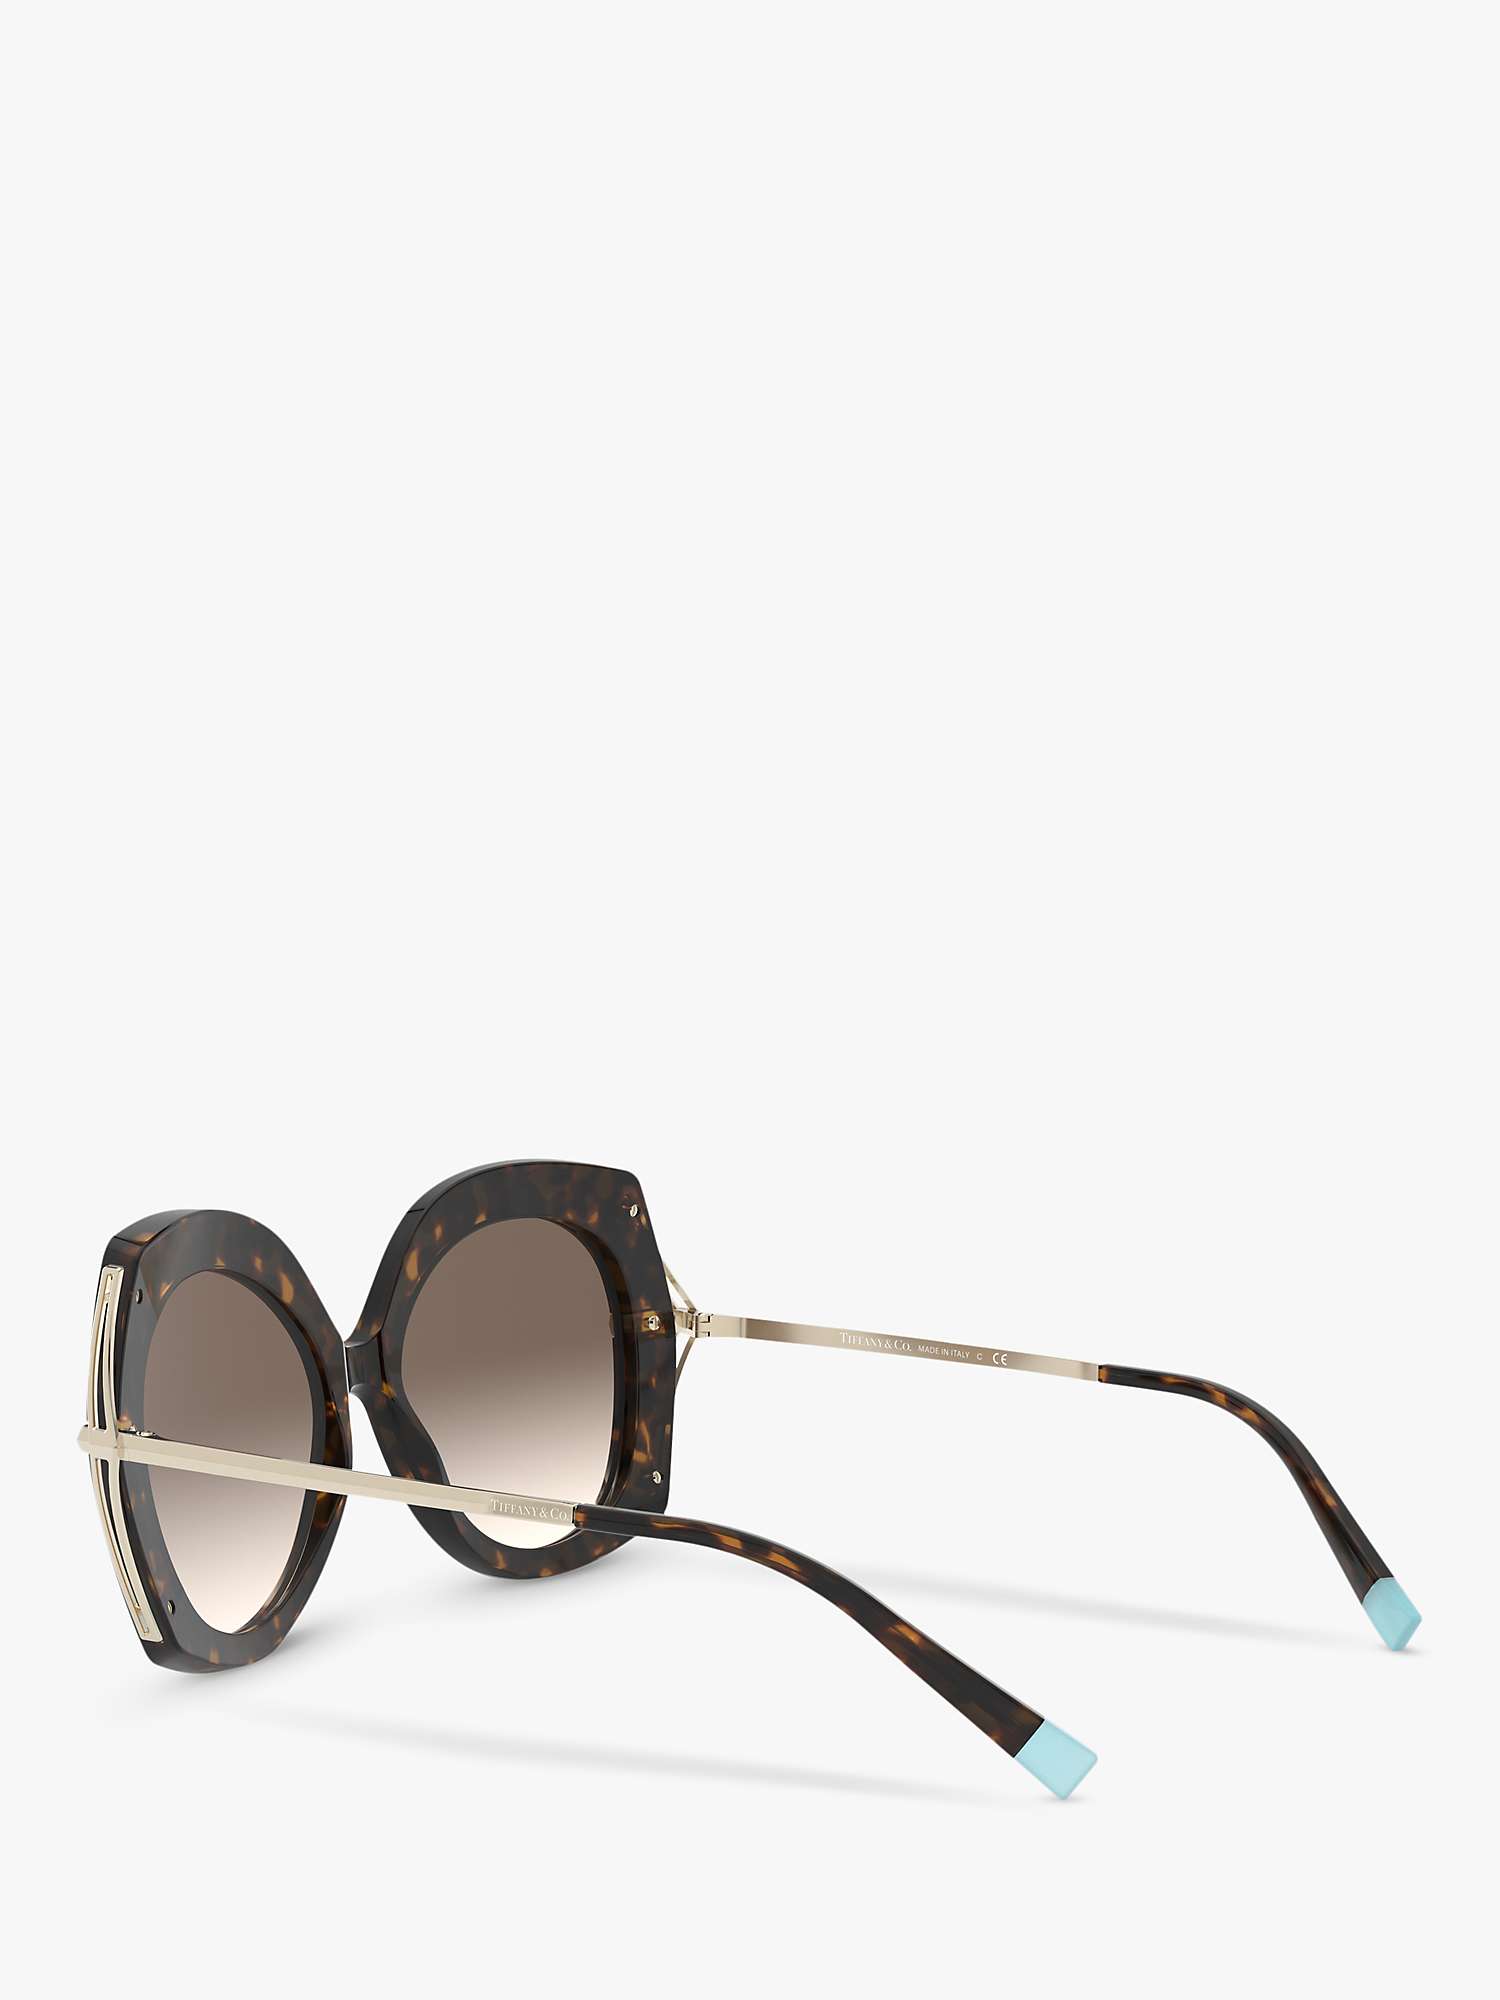 Buy Tiffany & Co TF4169 Women's Irregular Square Sunglasses, Dark Havana/Brown Gradient Online at johnlewis.com